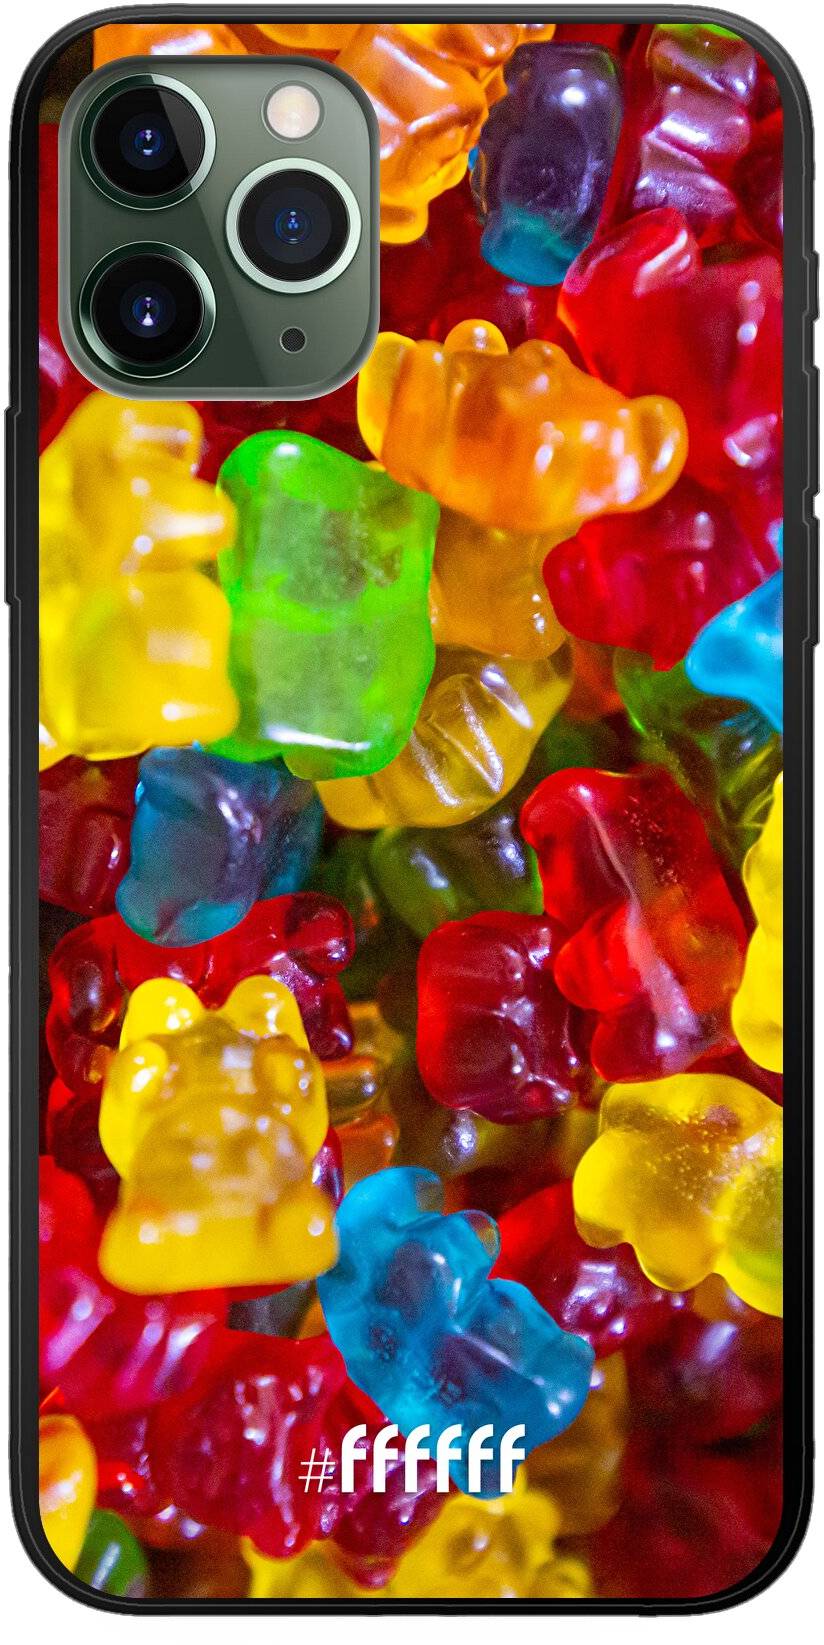 Gummy Bears iPhone 11 Pro